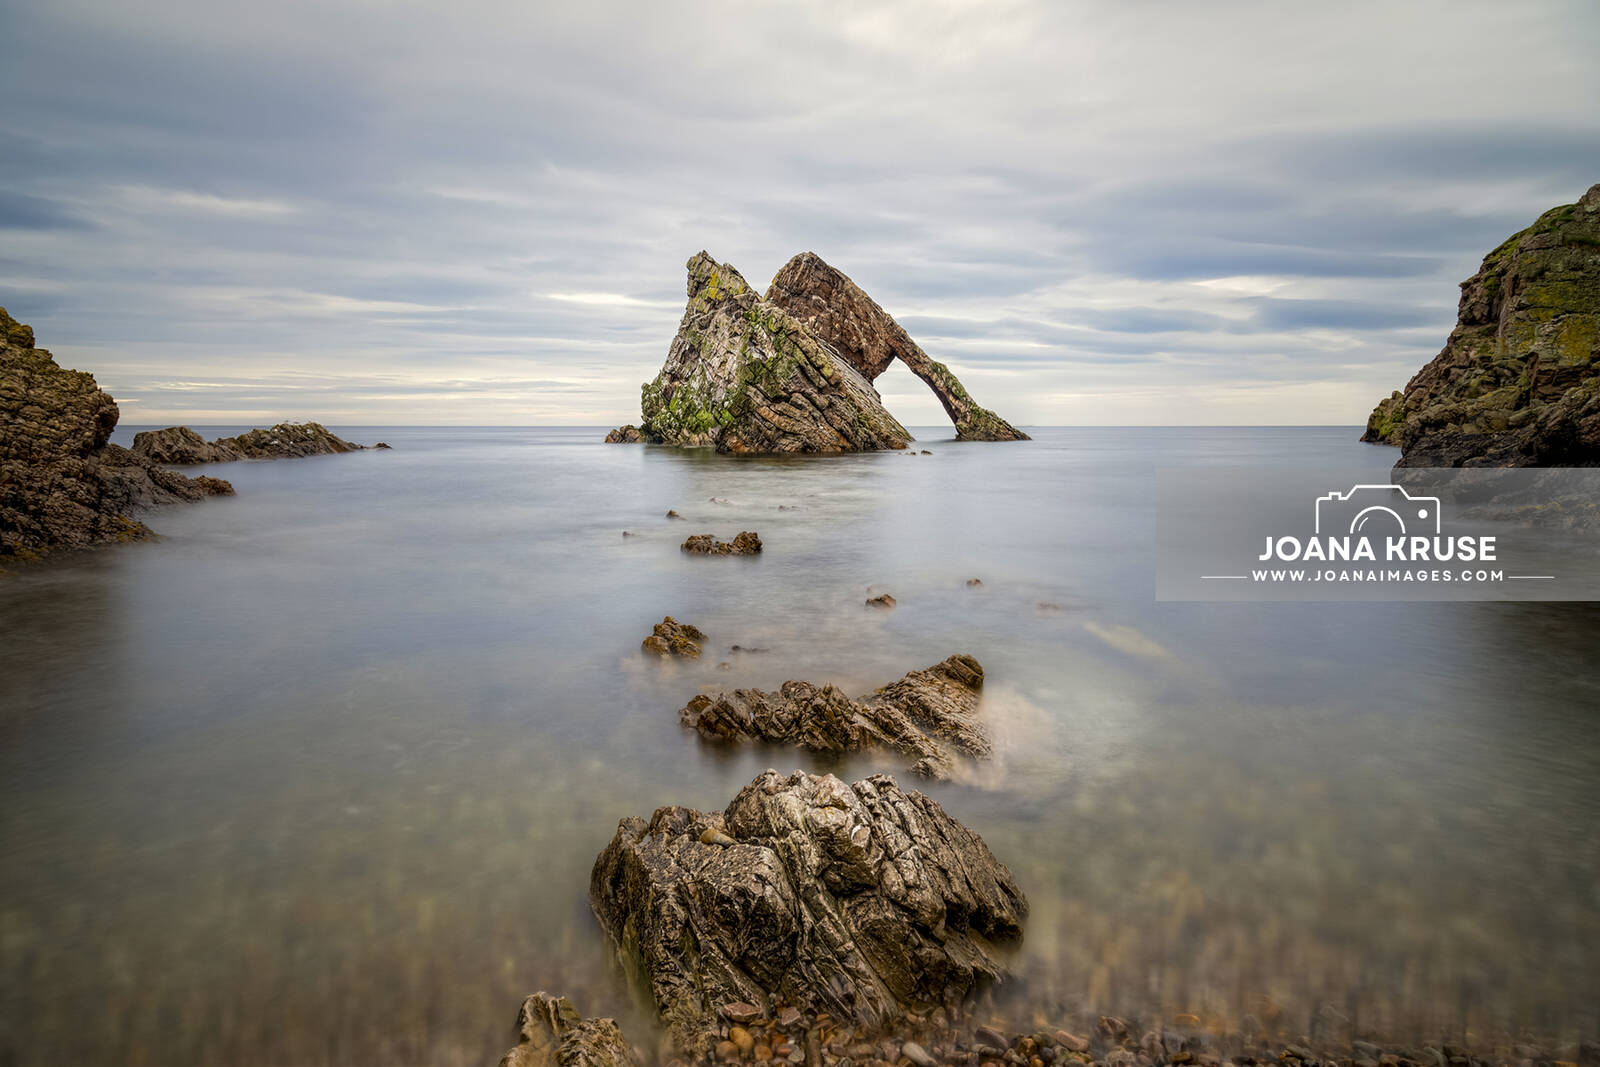 Image of Bow Fiddle Rock by Joana Kruse